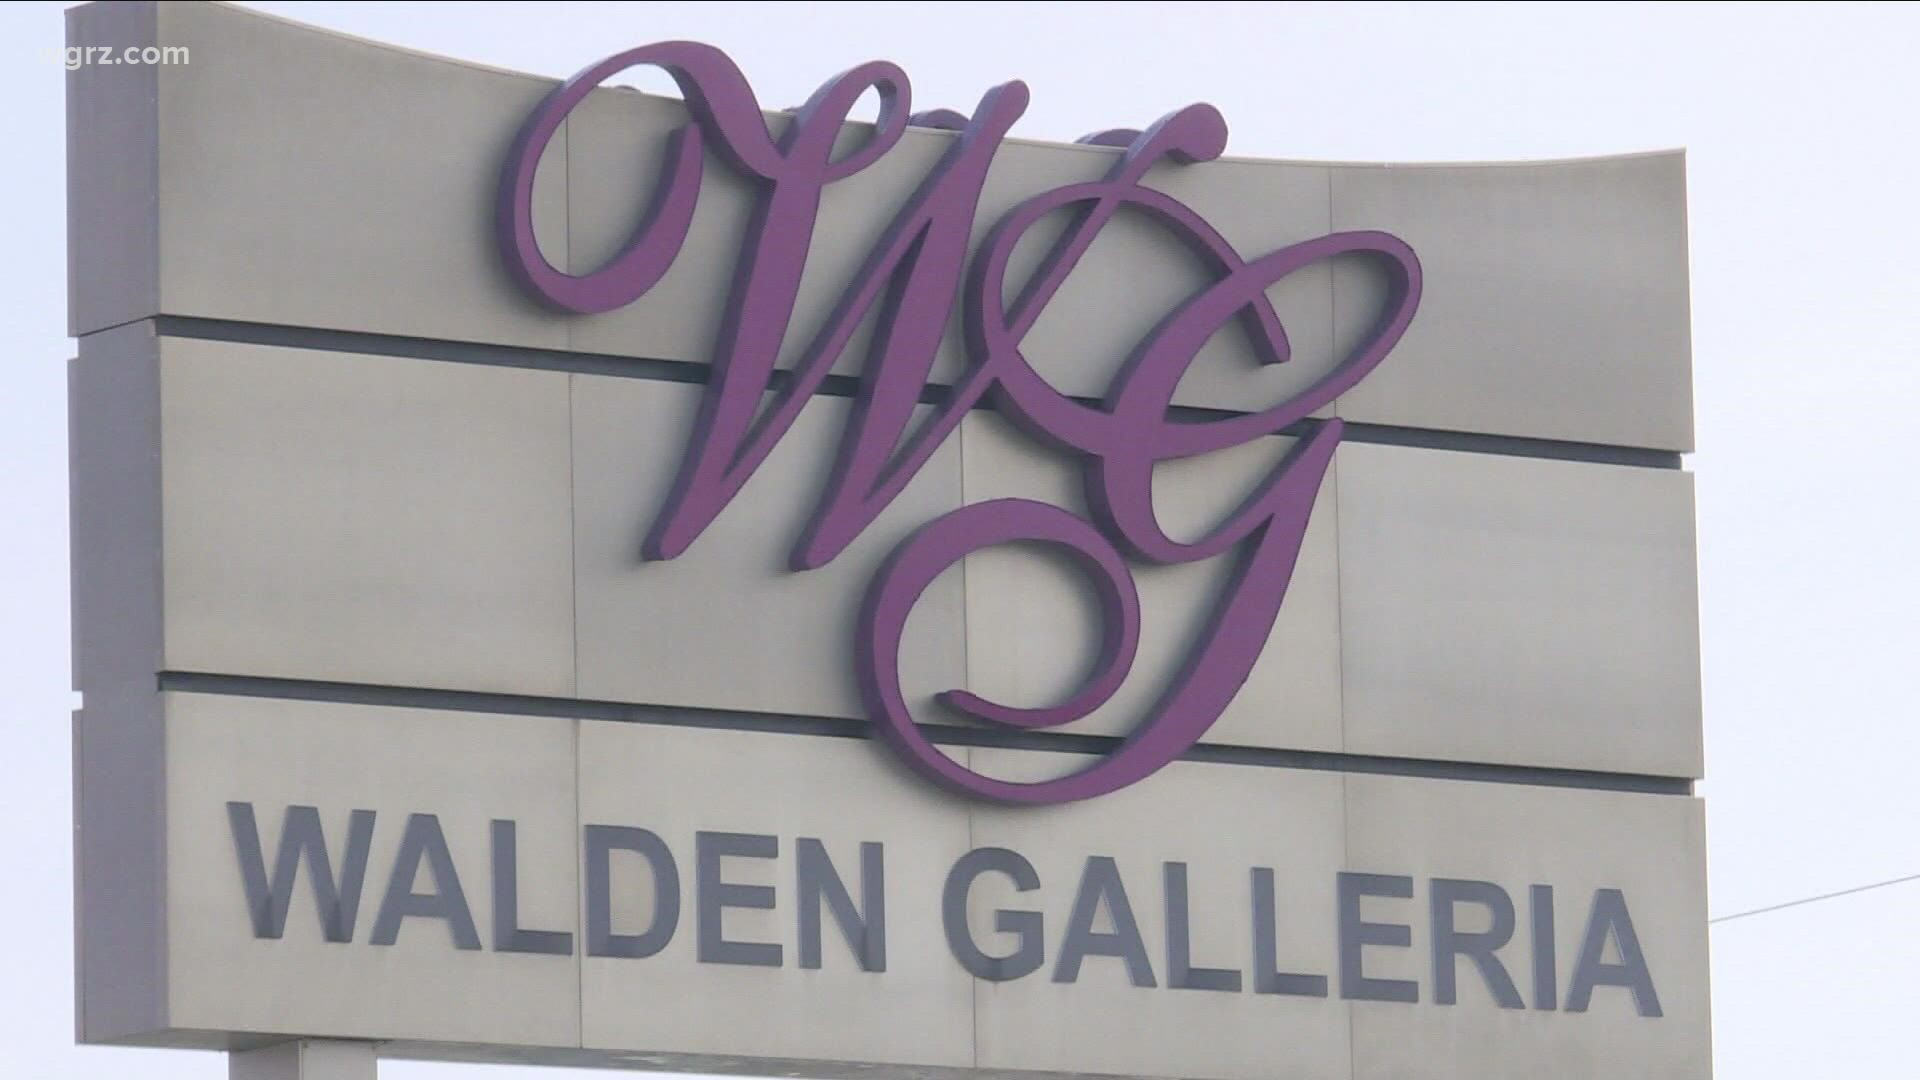 Offline by Aerie to open at Walden Galleria this week